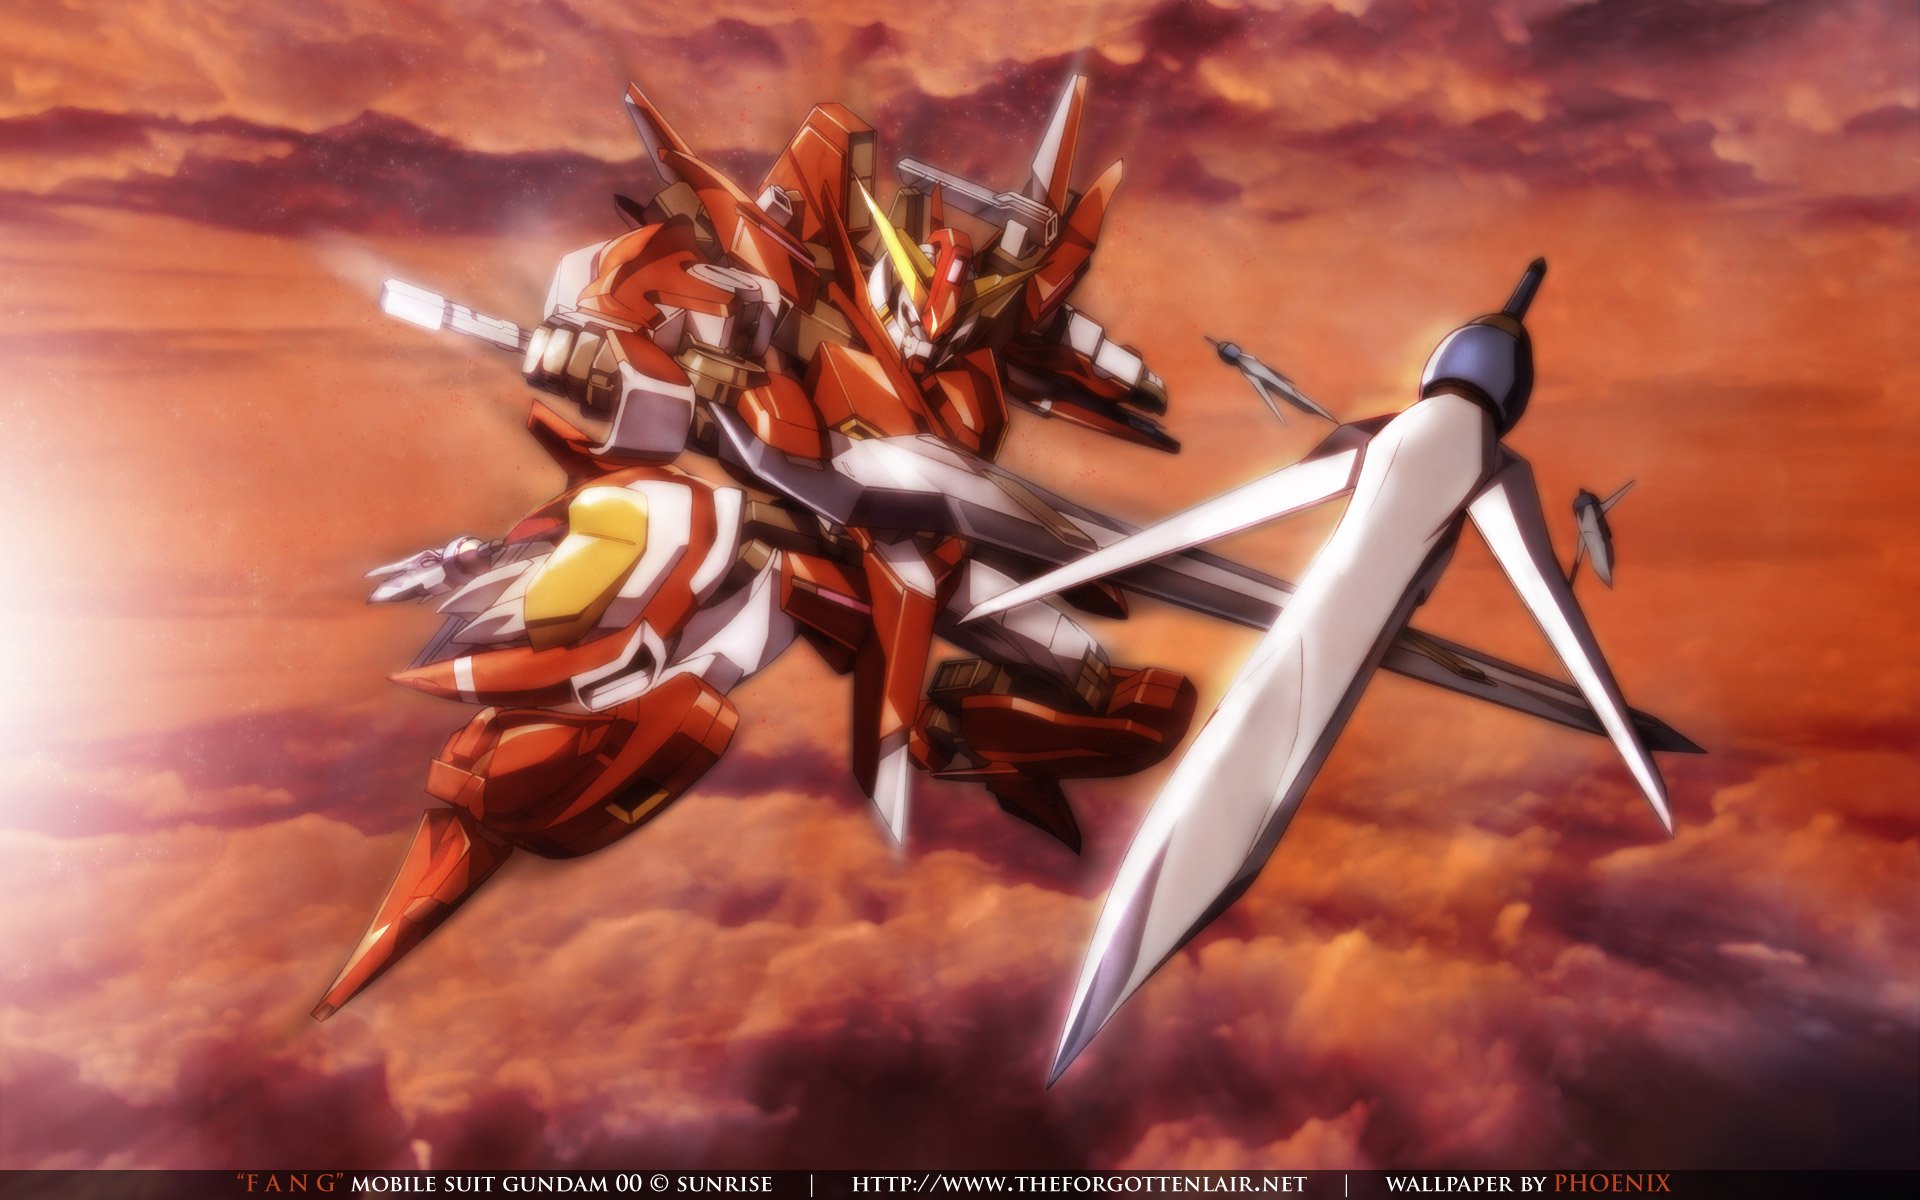  Mobile  Suit Gundam 00 Fond  d cran  HD Arri re Plan 